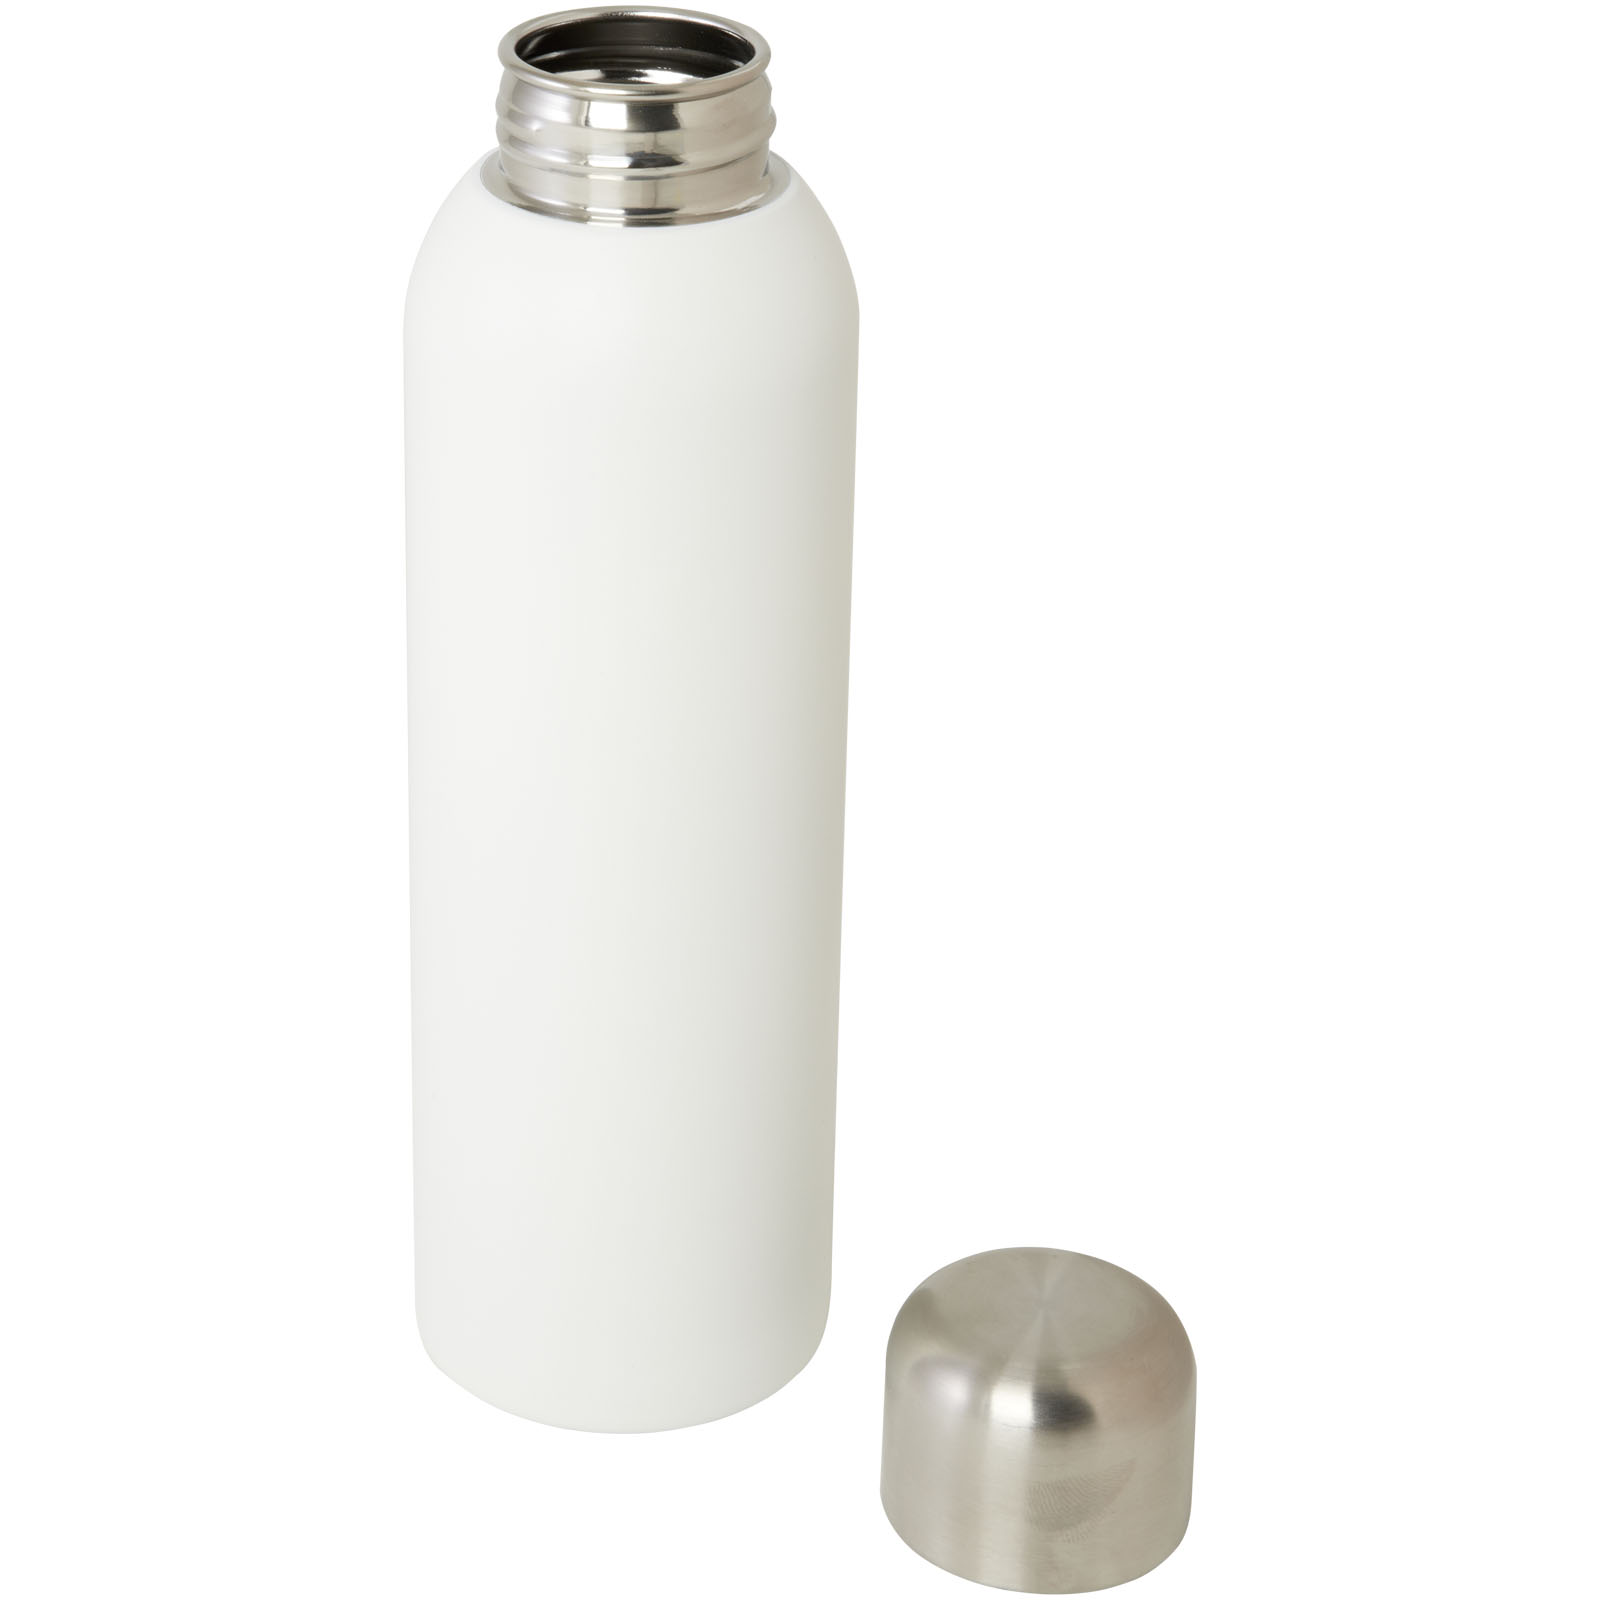 Advertising Water bottles - Guzzle 820 ml RCS certified stainless steel water bottle - 2